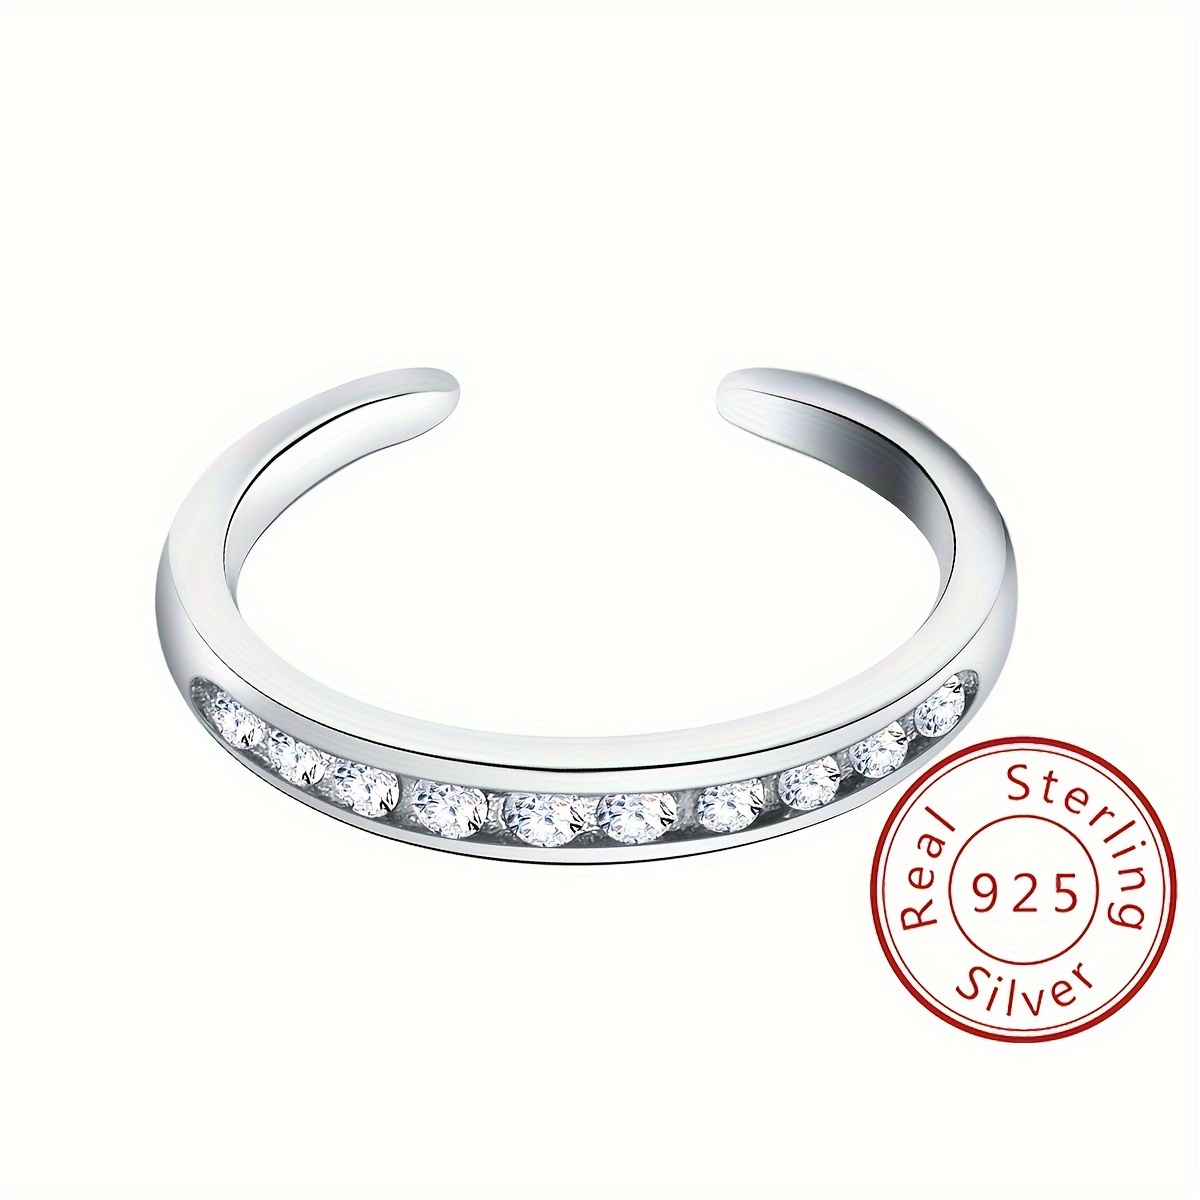 Gemstone Toe Ring Adjustable, 925 Sterling Silver